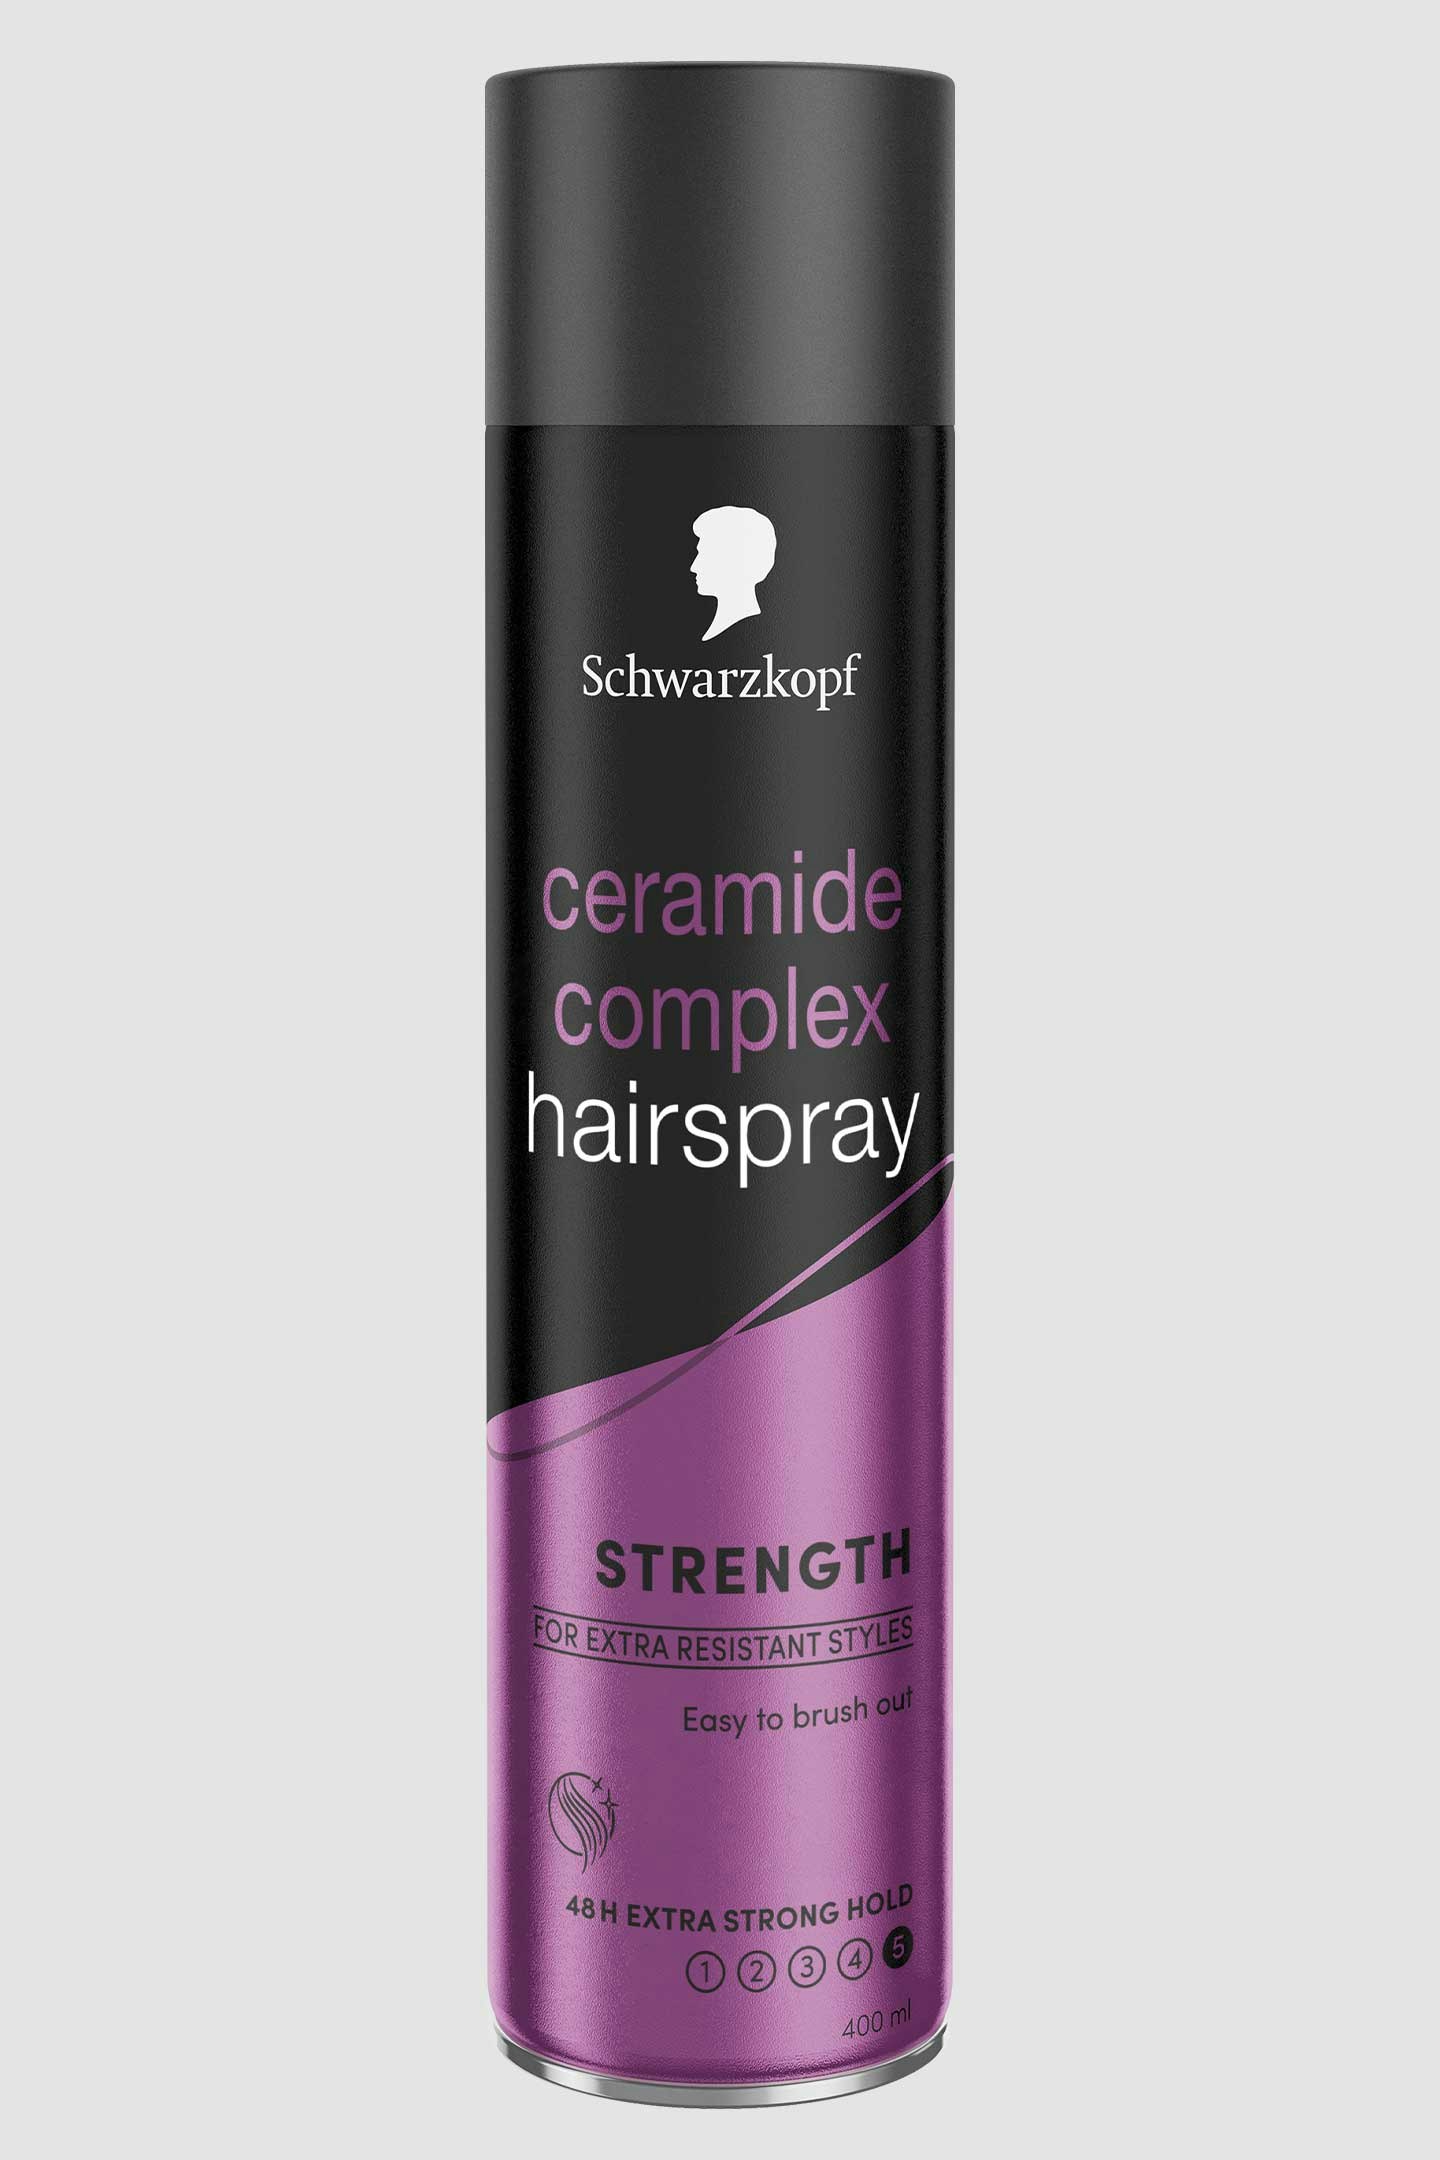 Schwarzkopf Ceramide Hairspray